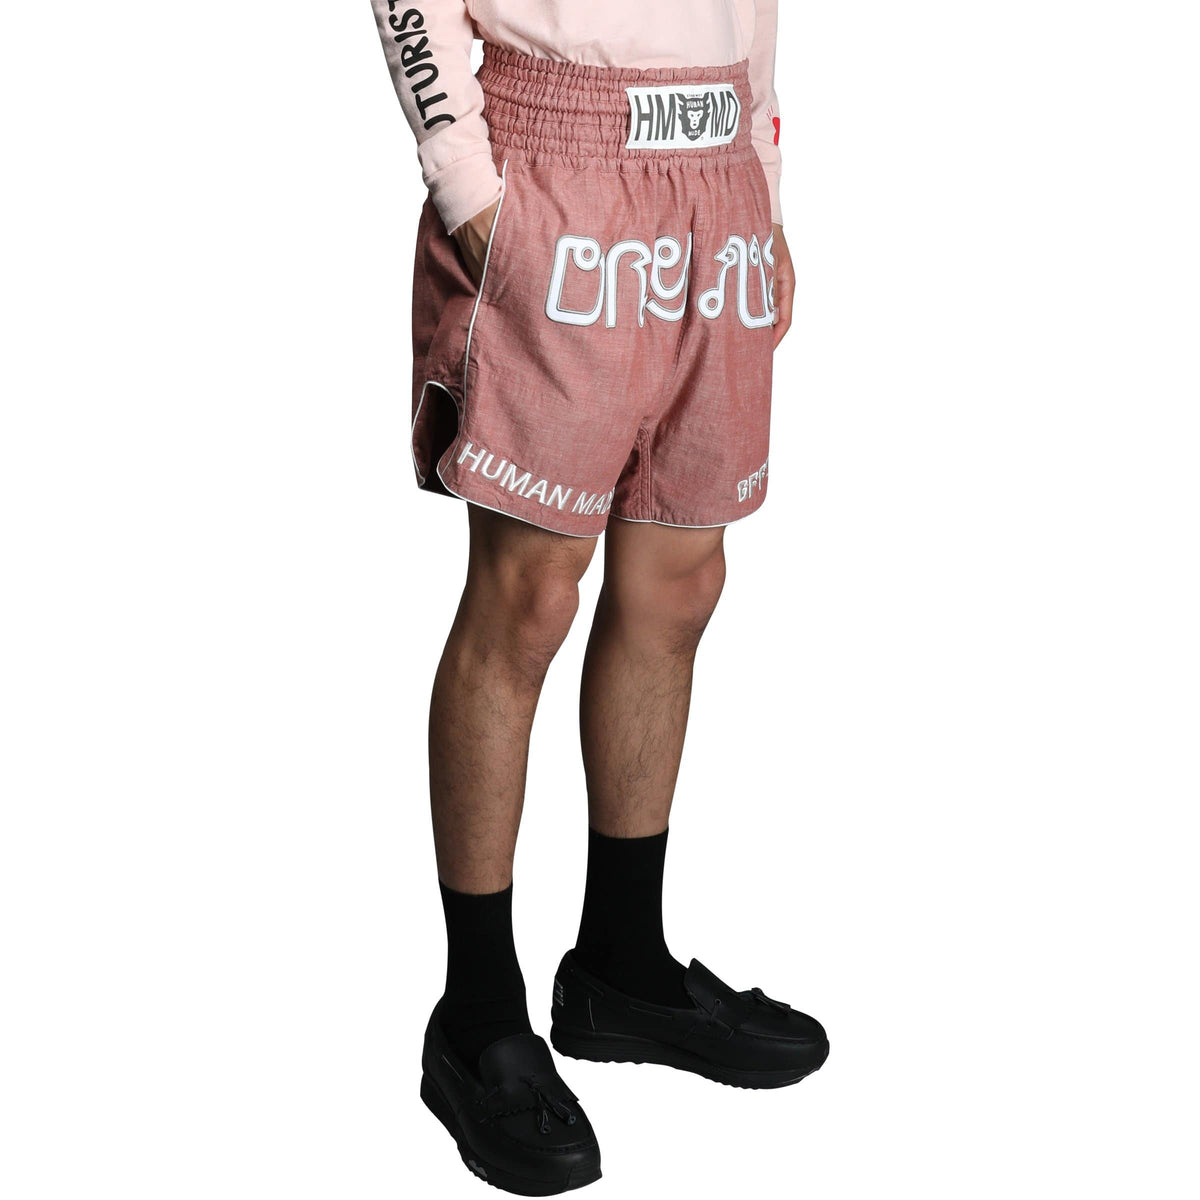 nike thai boxing shorts